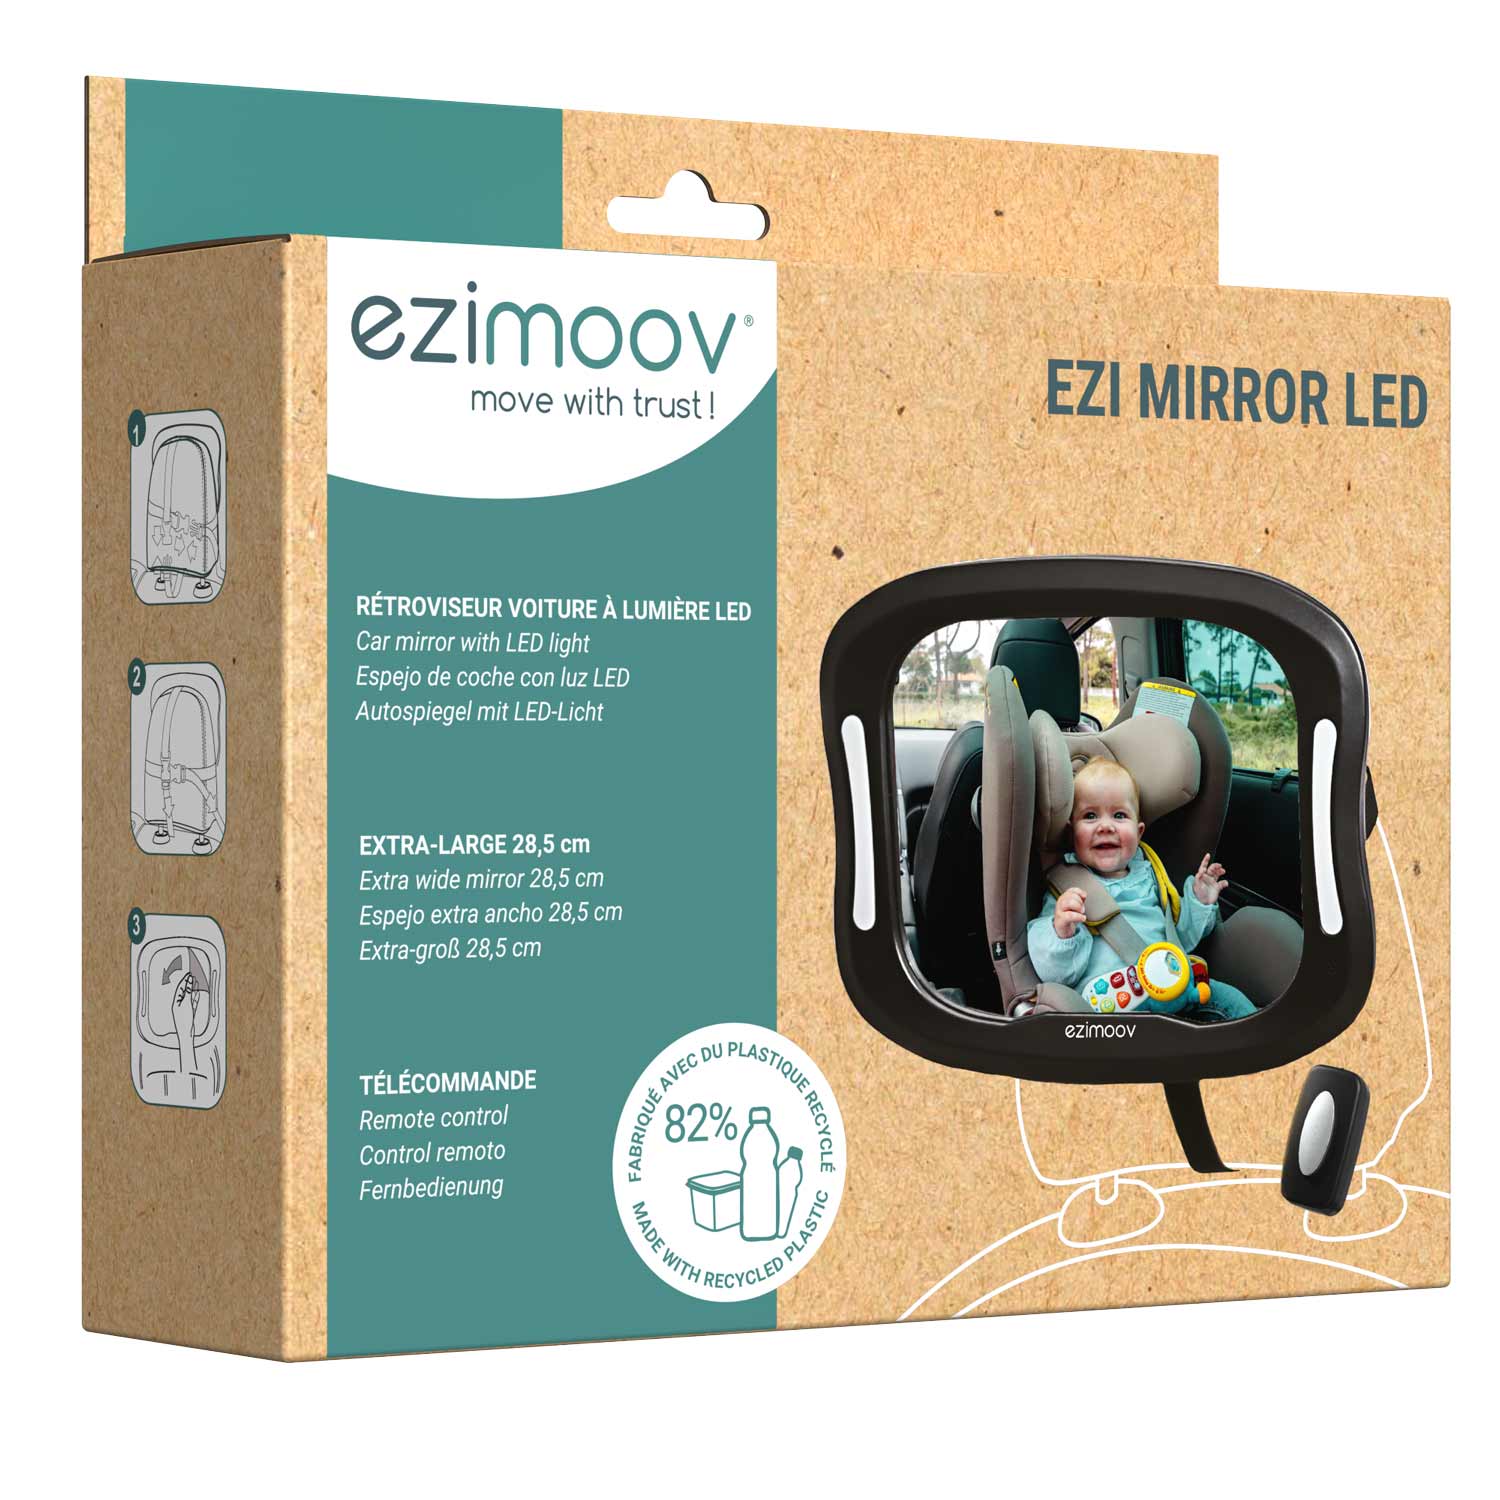 ezimoov_miroir_voiture_LED_packaging_facing